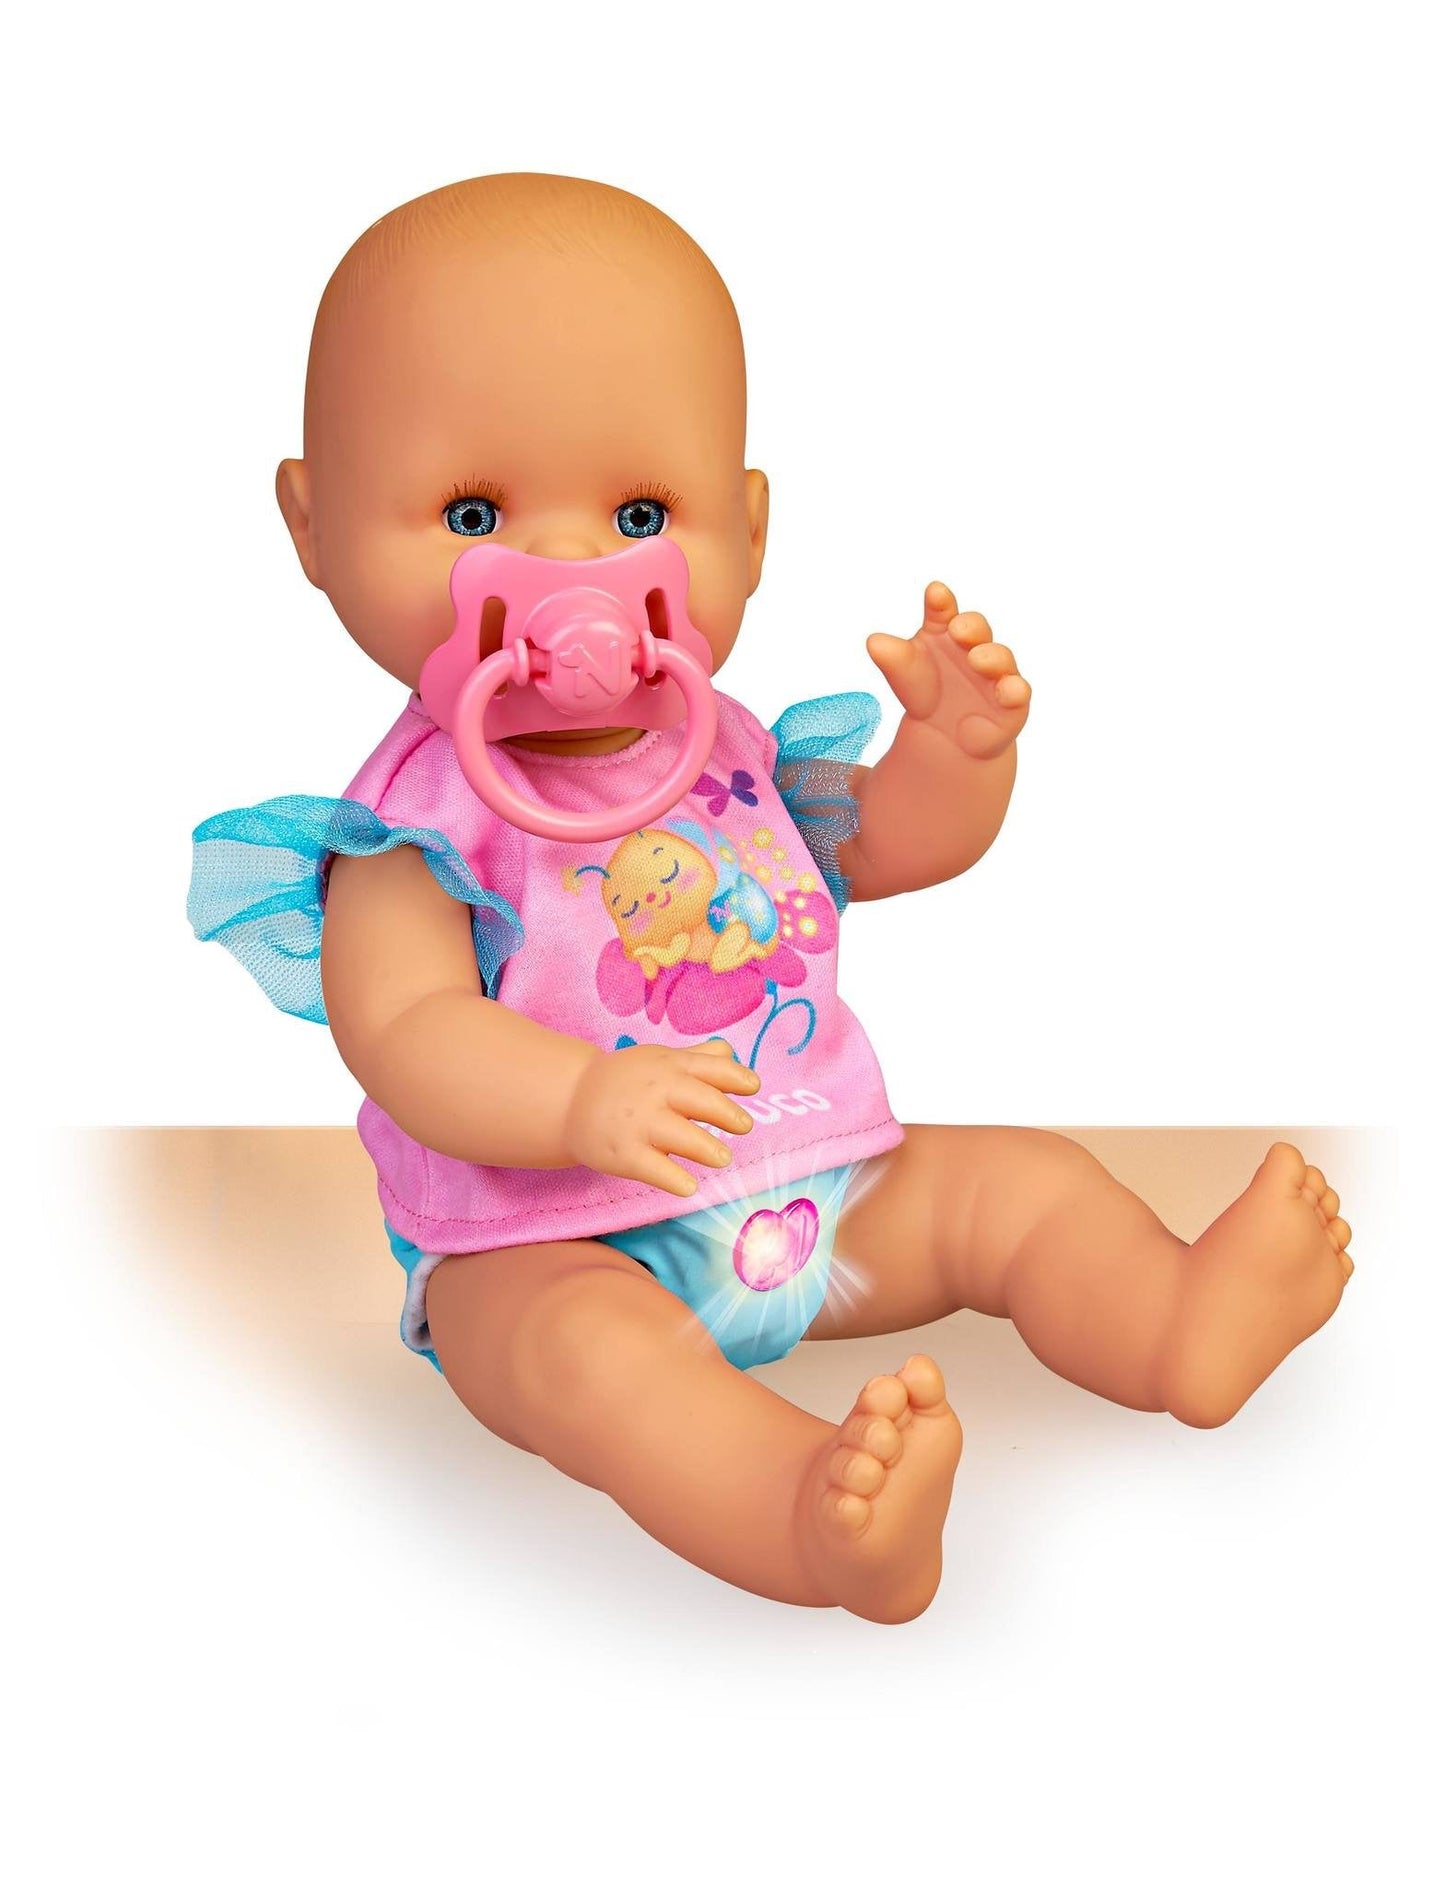 Nenuco Magic Diaper Baby Doll Play Set